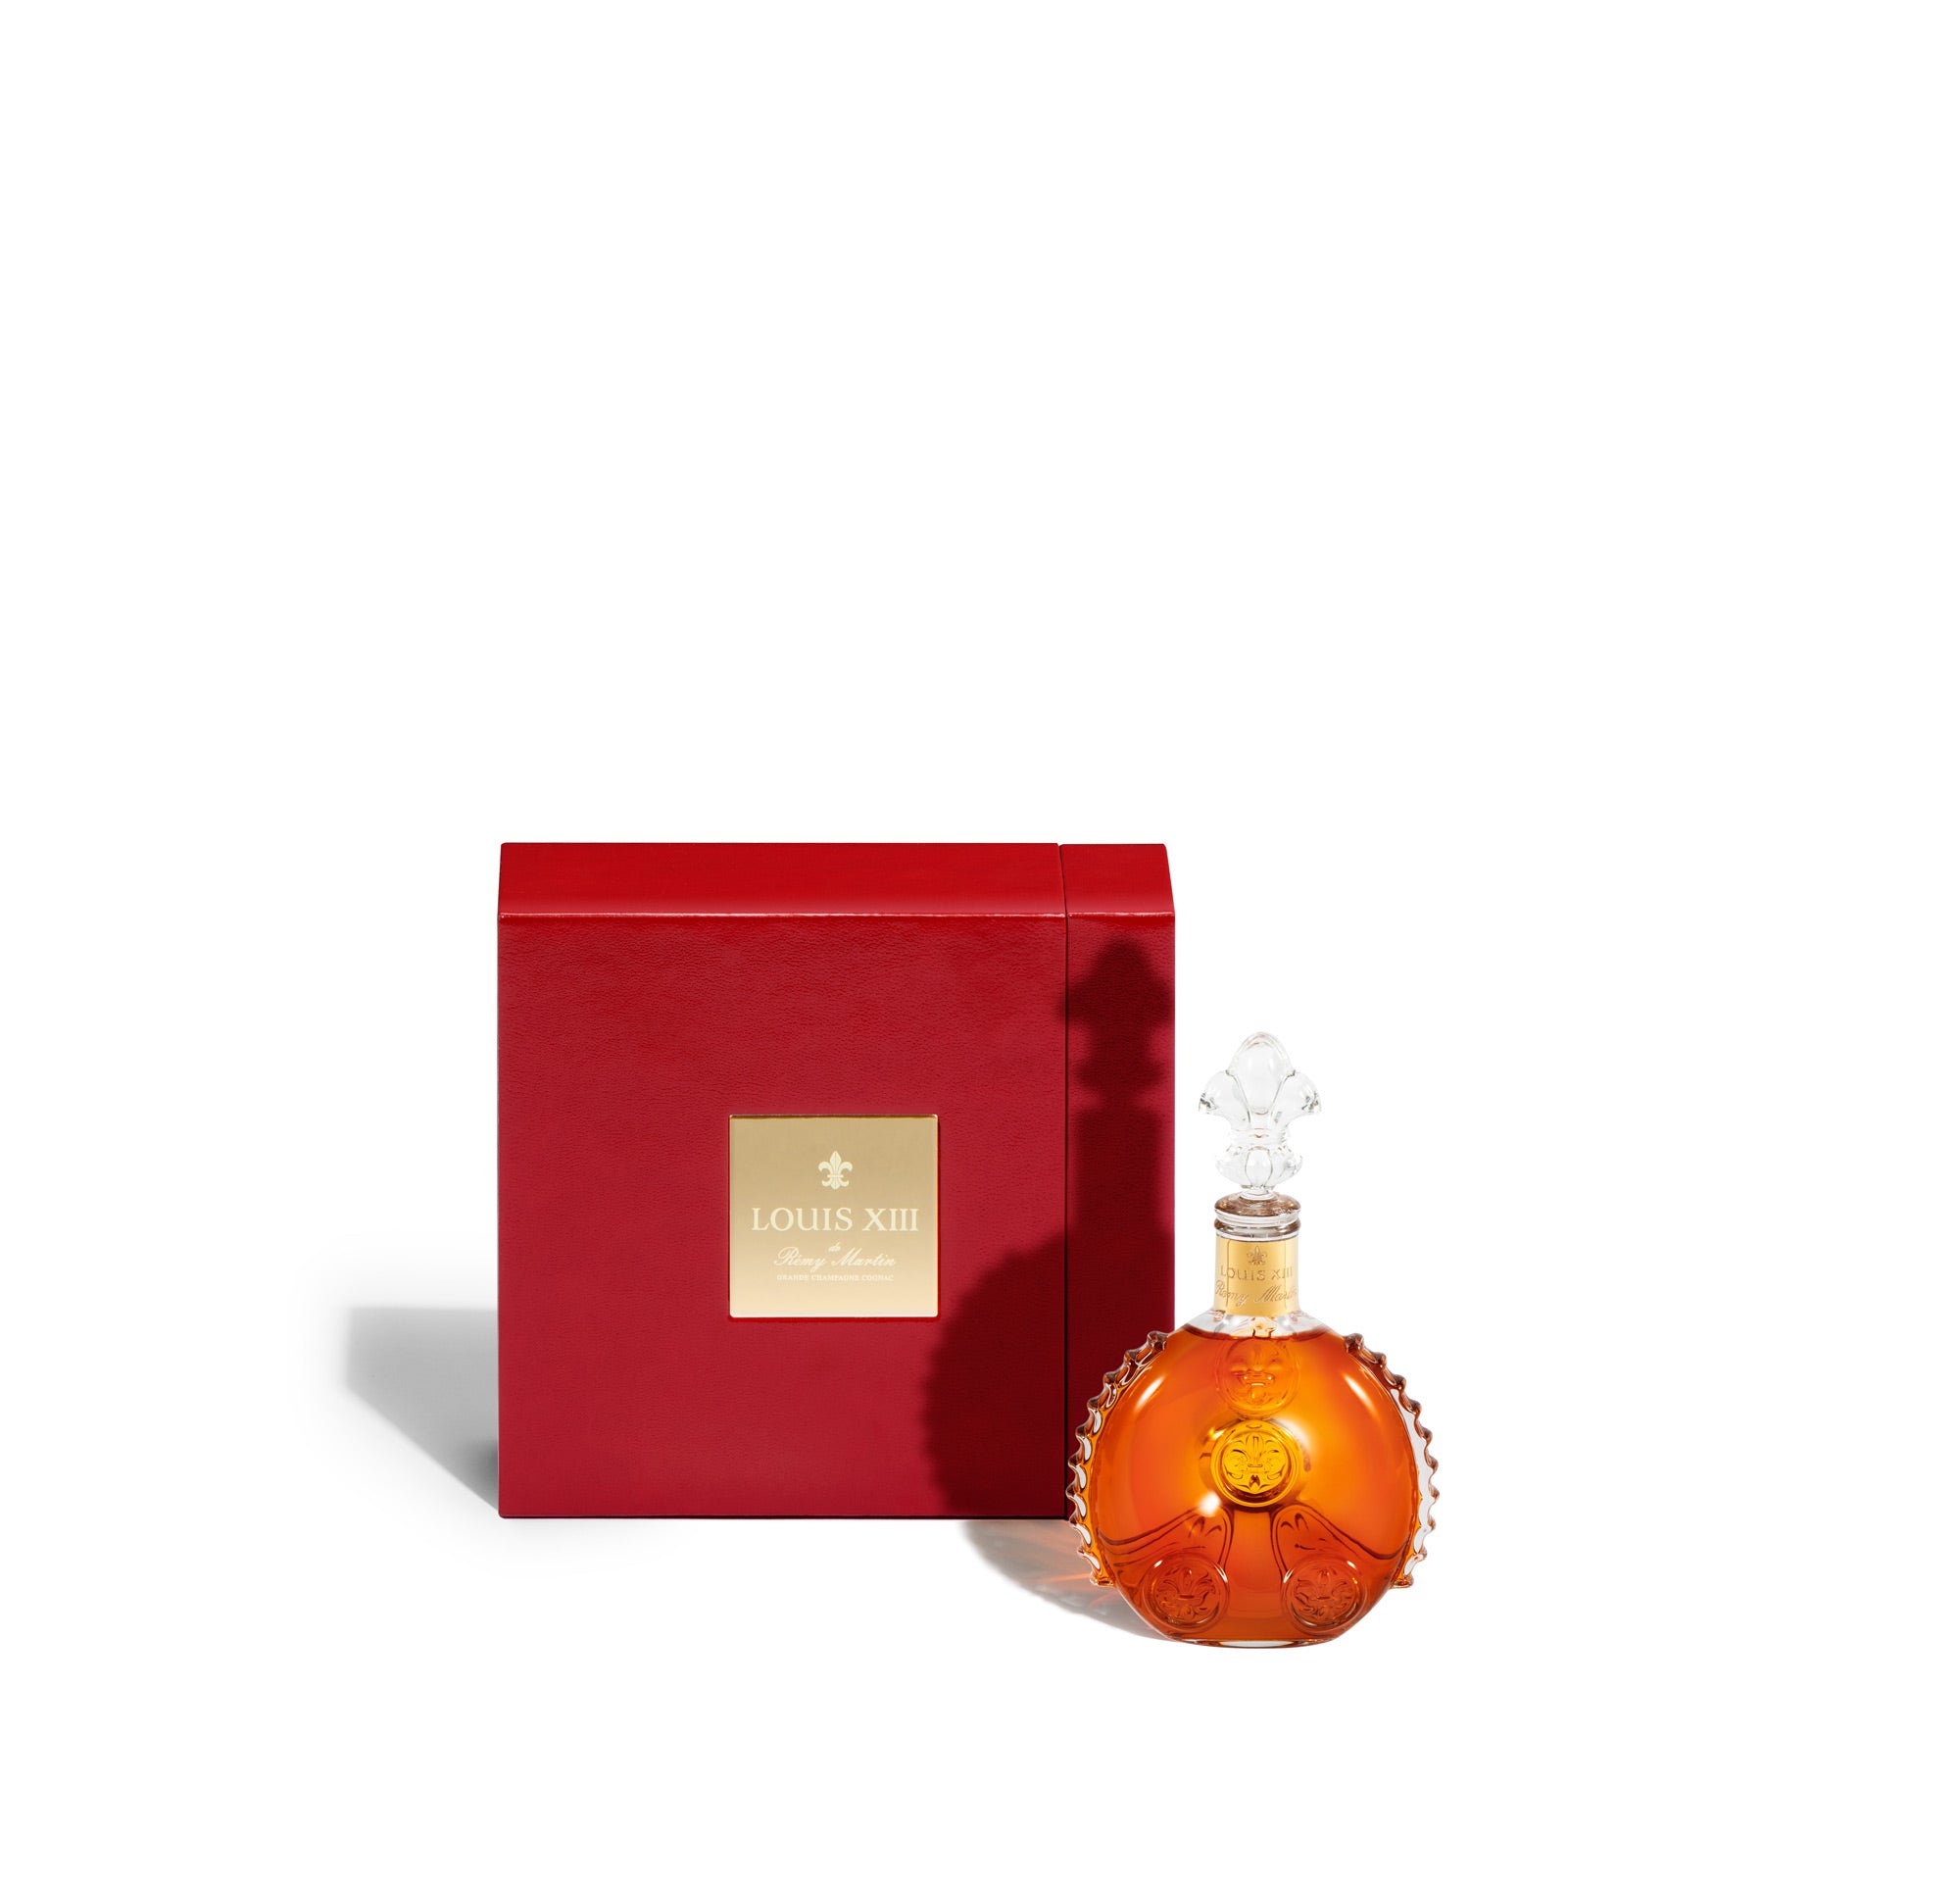 The Miniature 5cl LOUIS XIII Cognac - Official website